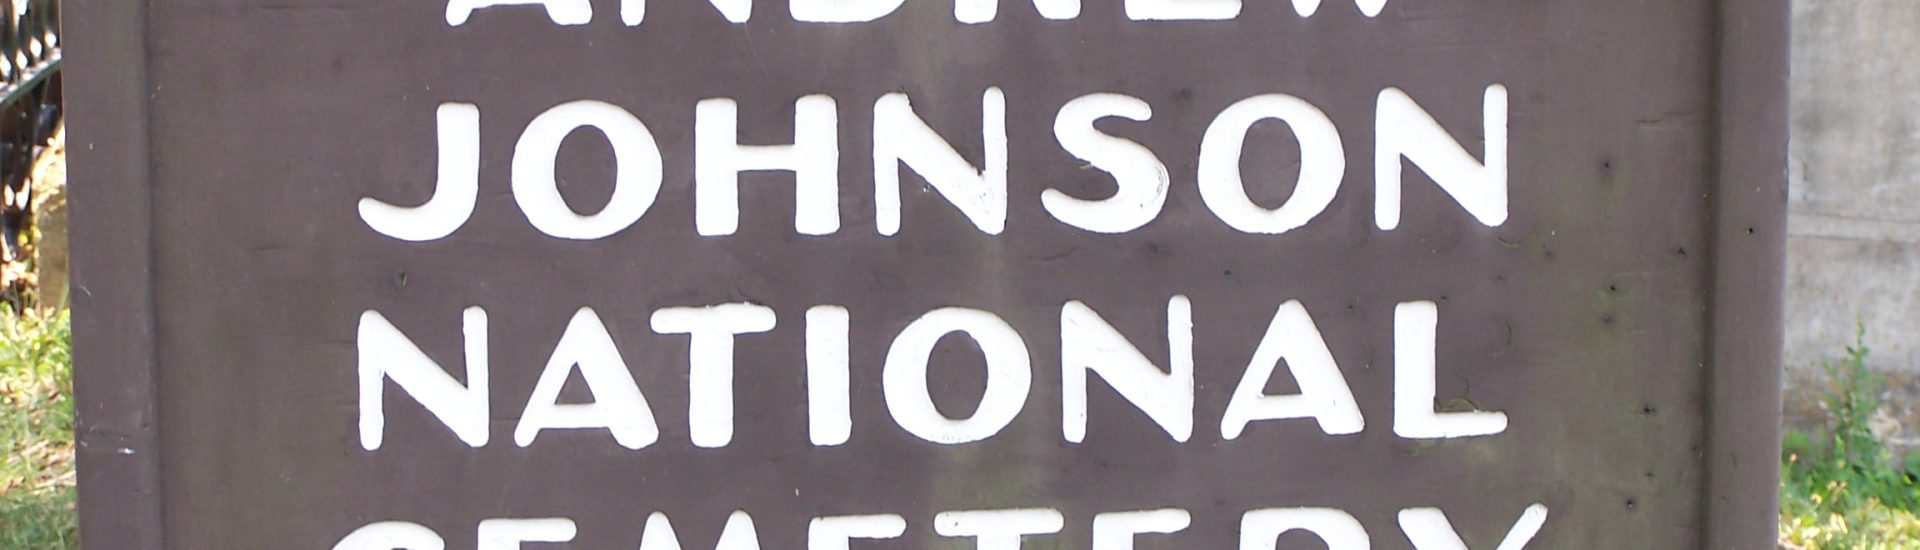 johnson cemetery sign